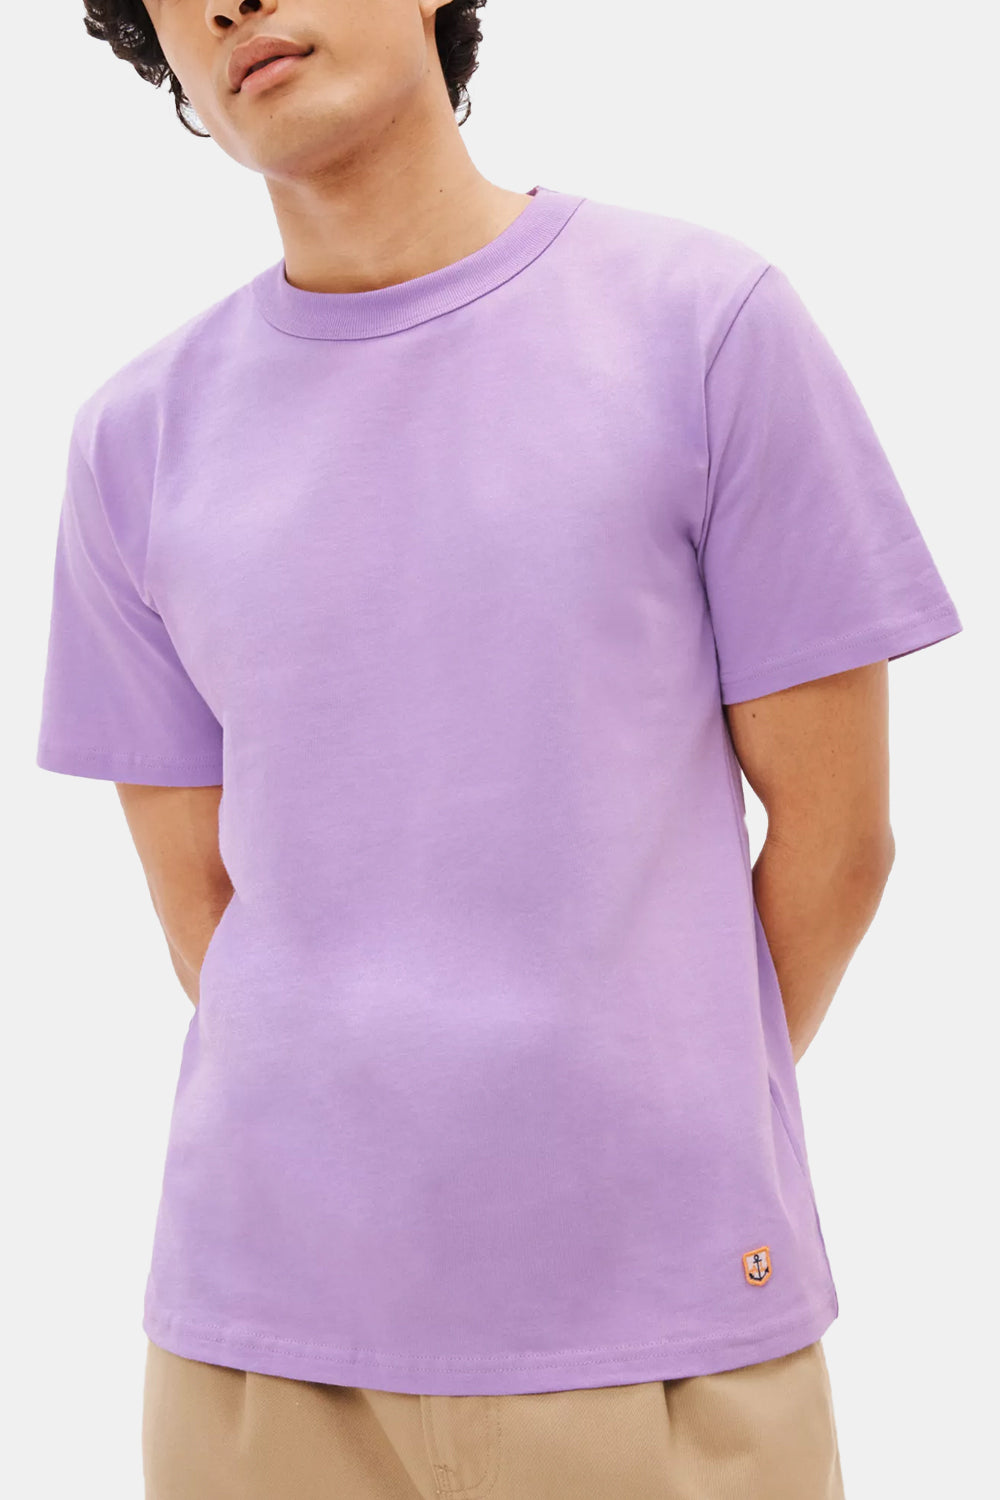 Armor Lux Heritage Organic Callac T-Shirt (Purple)
